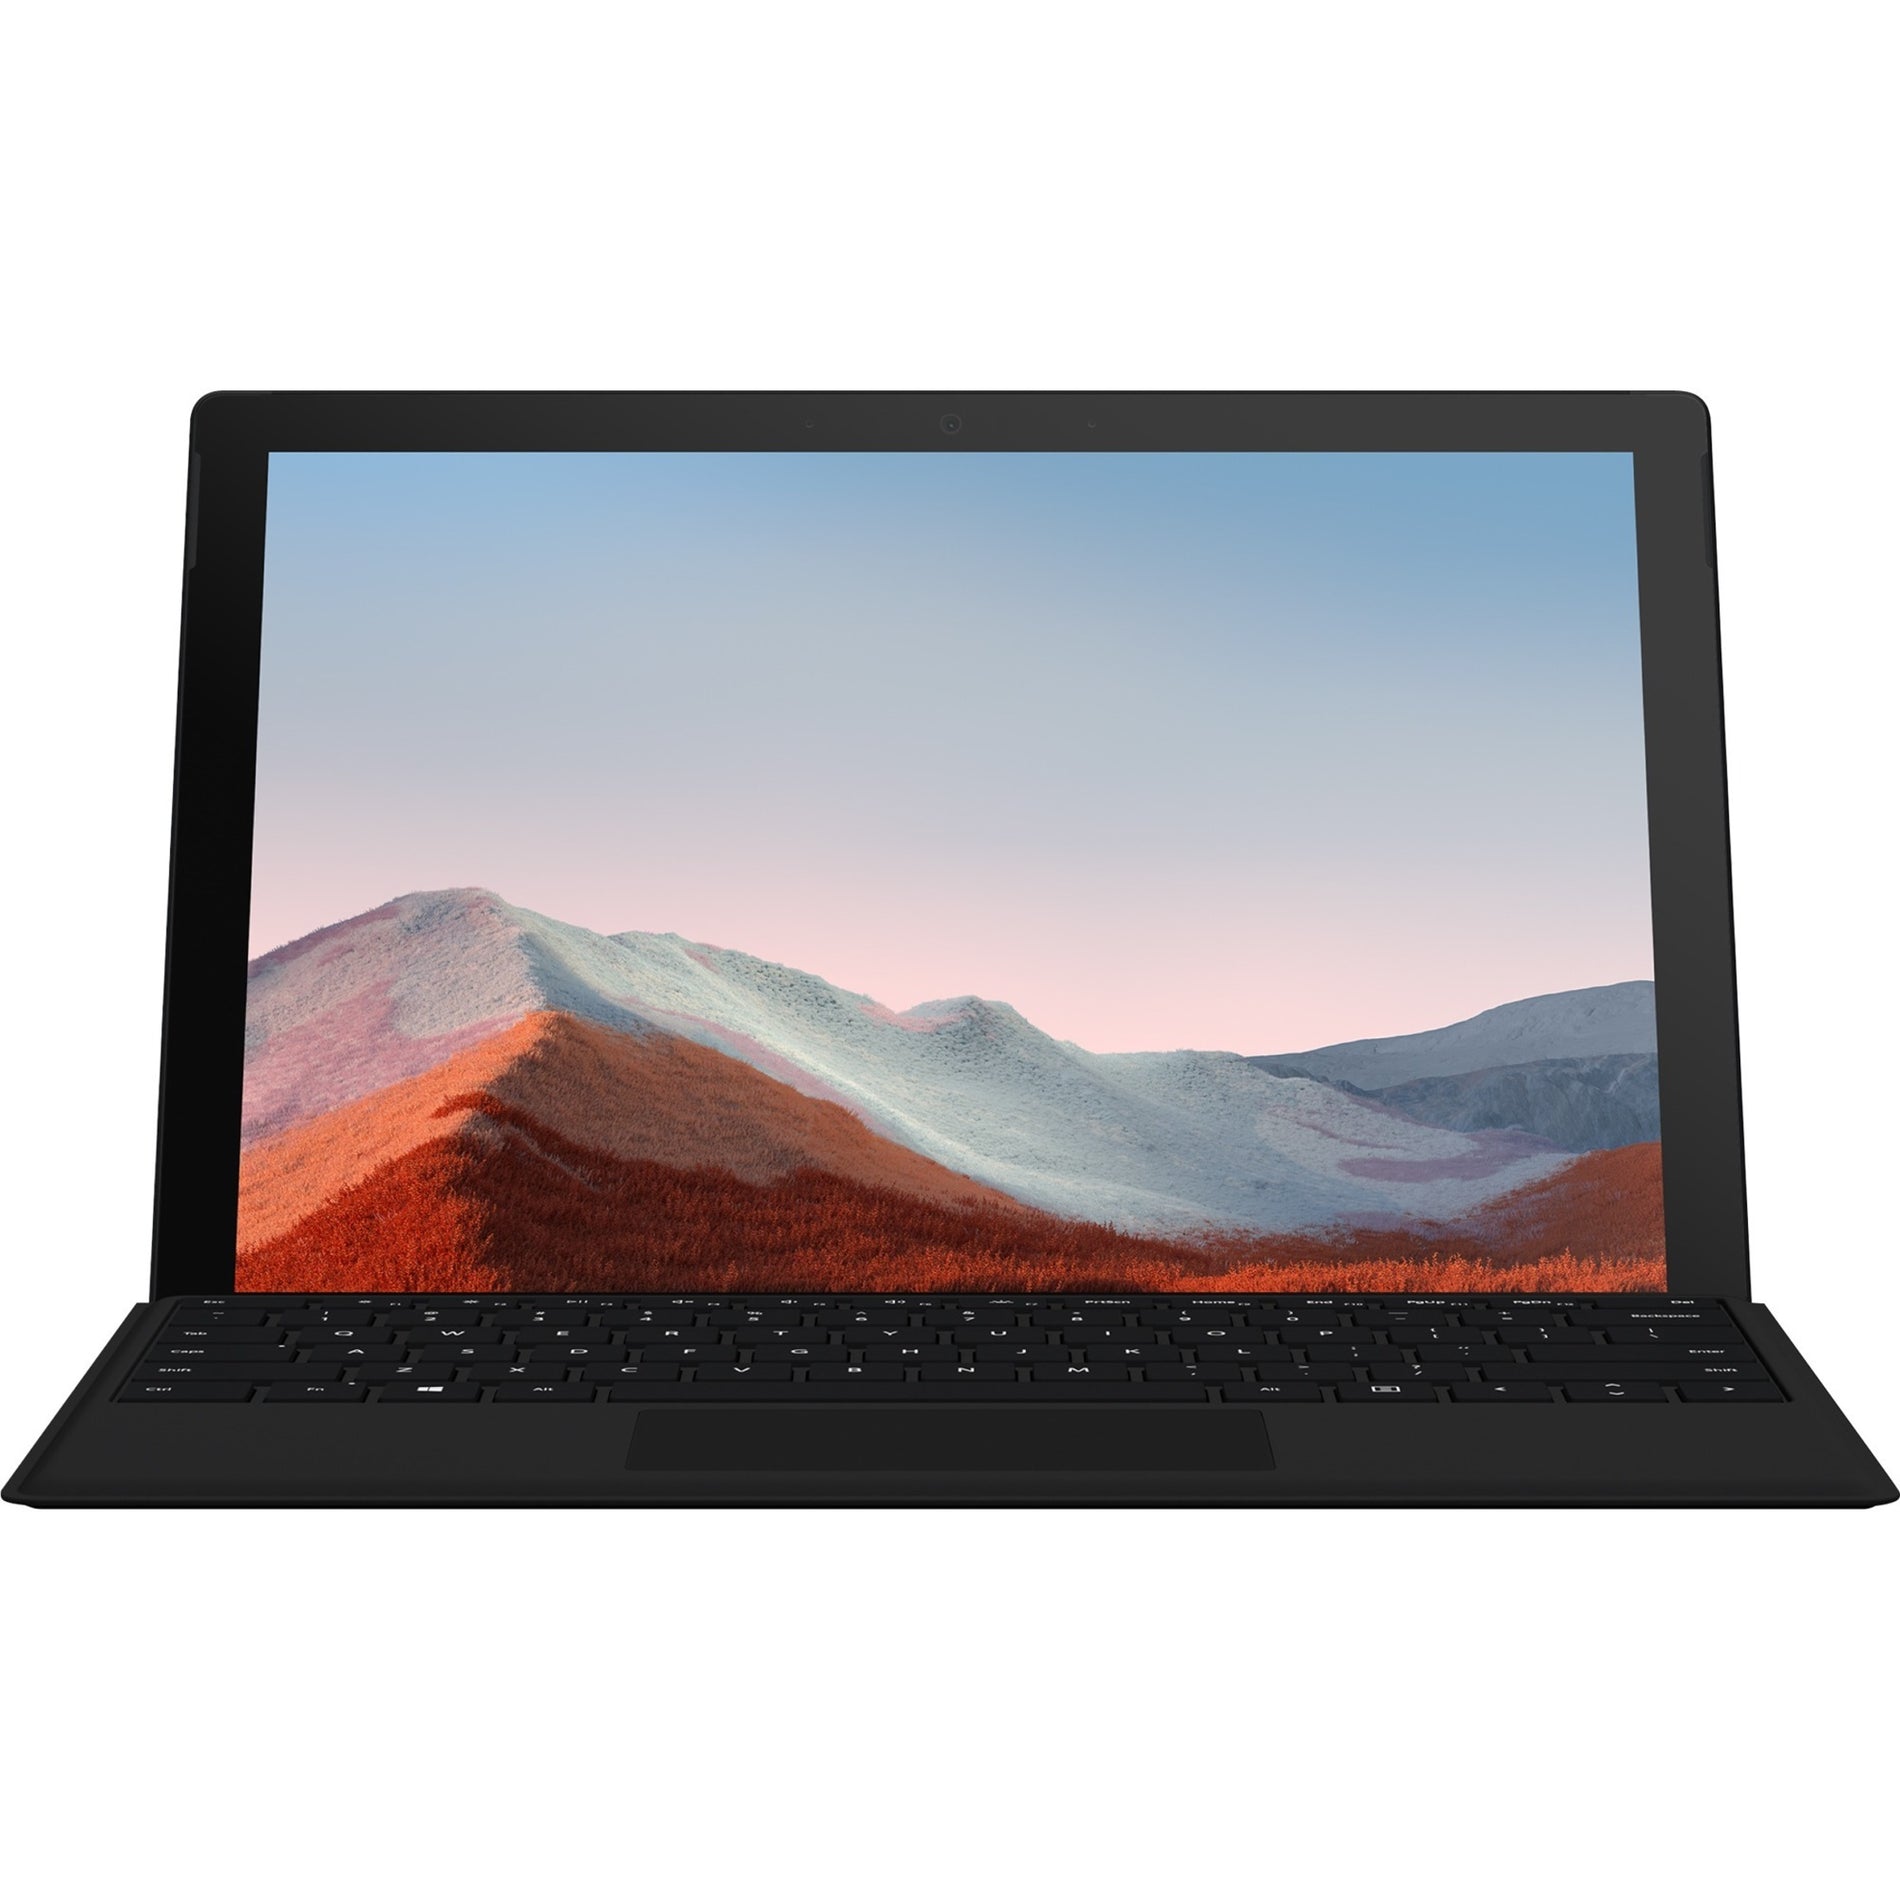 Microsoft 1XX-00002 Surface Pro 7+ Tablet, 12.3" PixelSense Display, Core i5, 8GB RAM, 256GB SSD, Windows 10 Pro